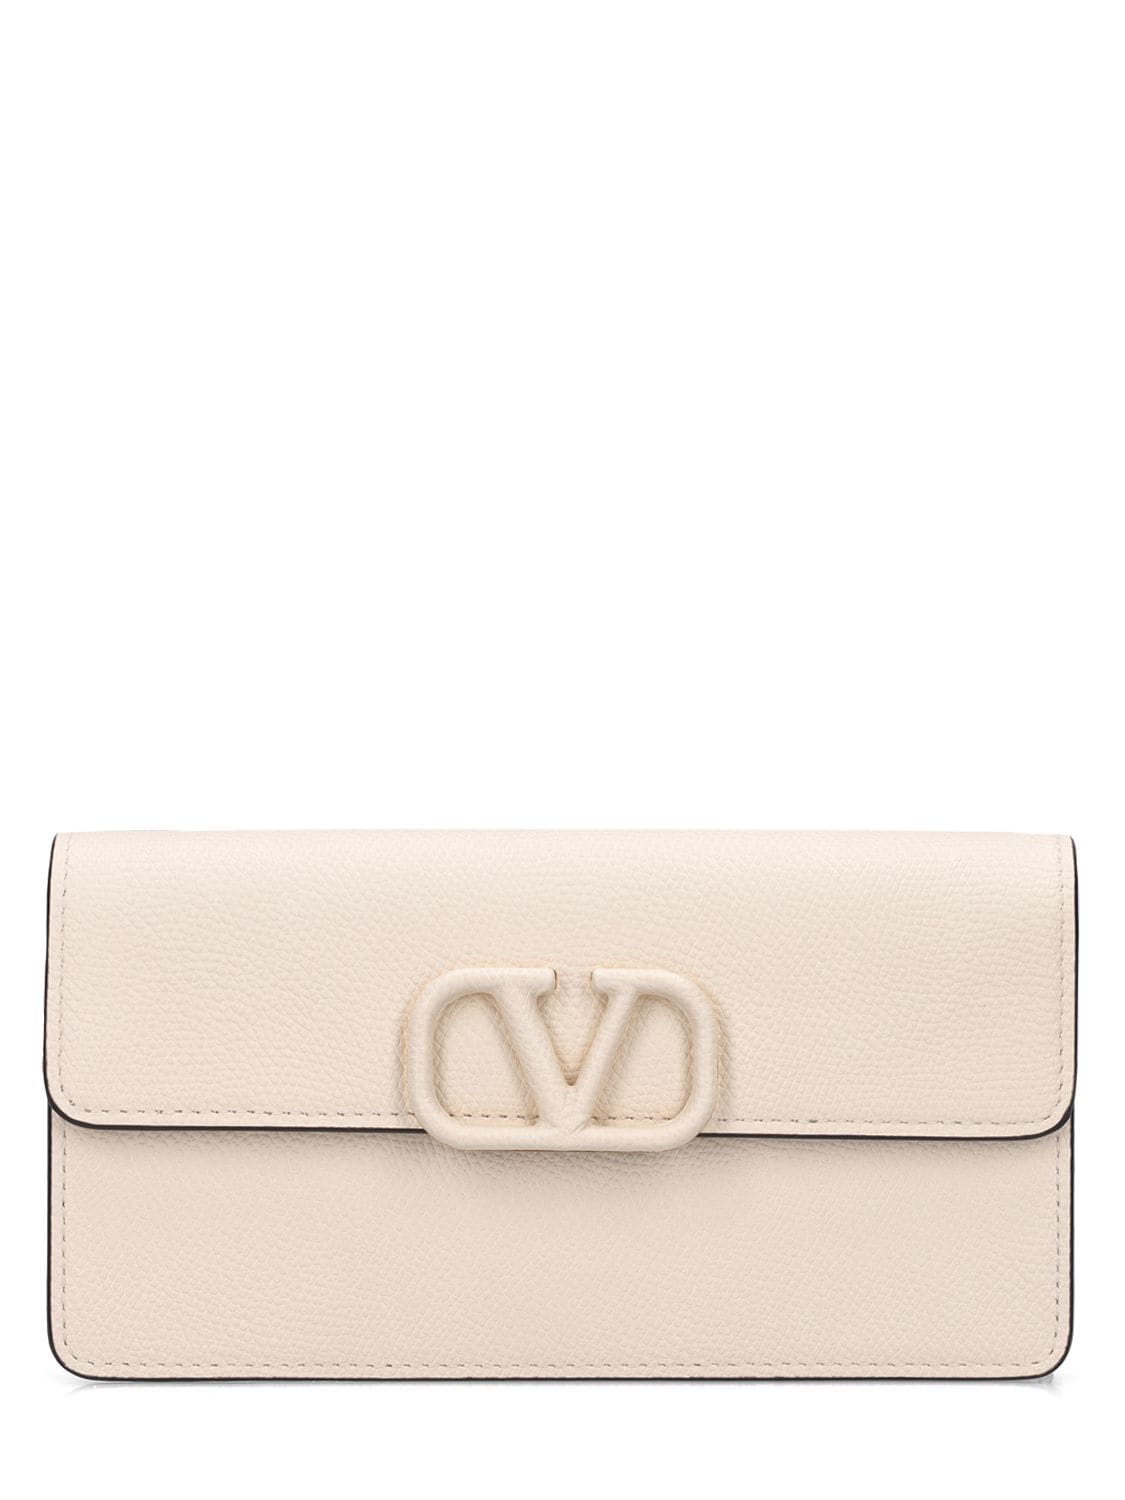 Valentino Garavani Vlogo Leather Wallet W/chain In Light Ivory